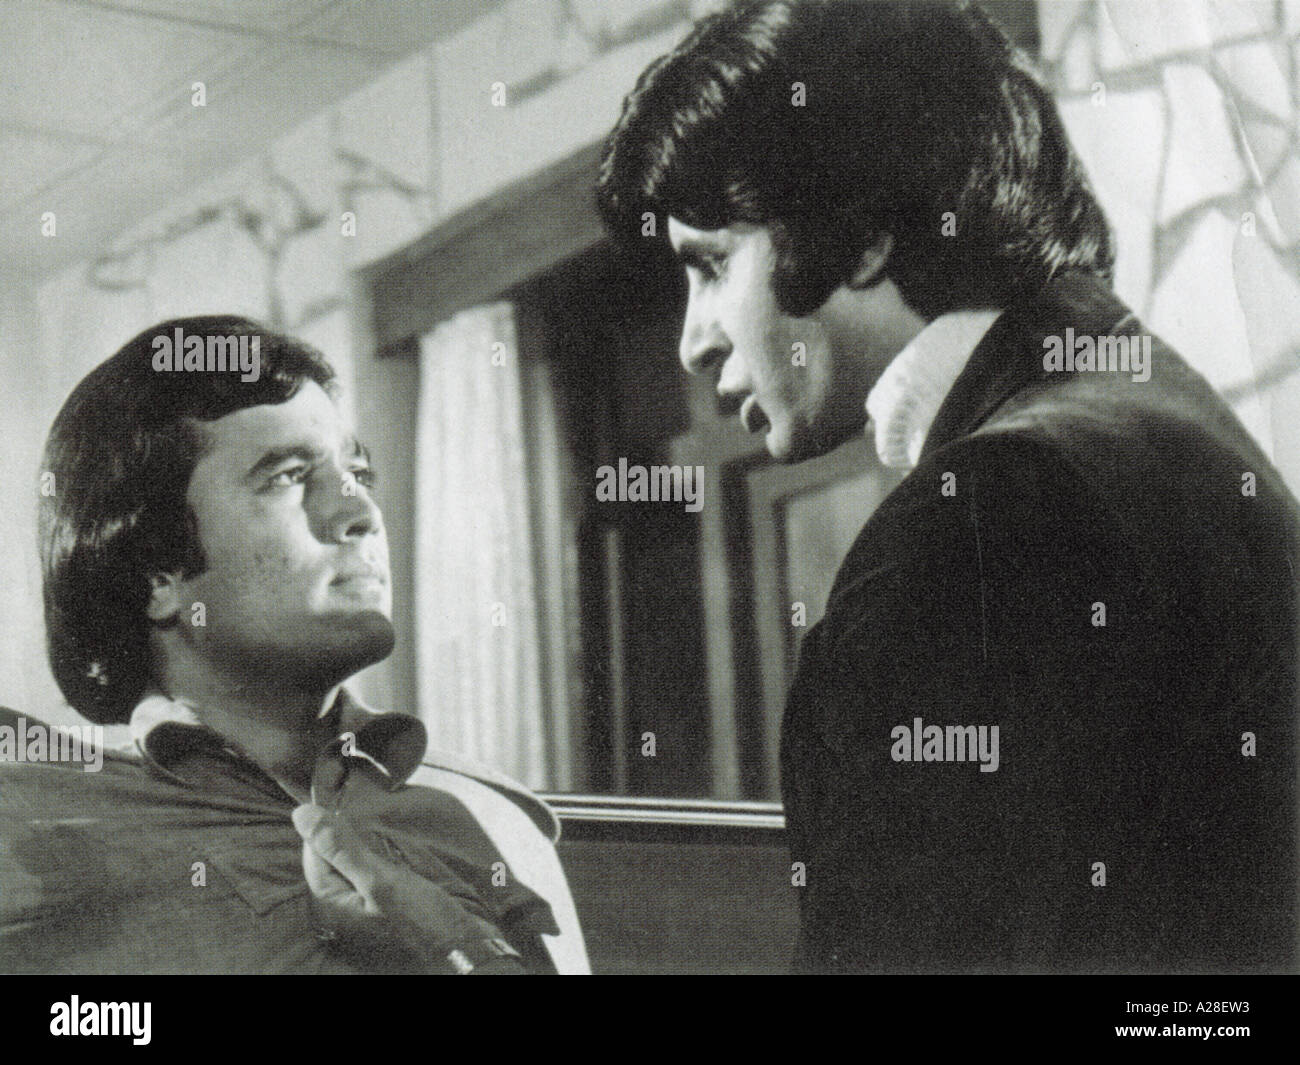 Amitabh Bachchan with Rajesh Khanna in Film Namak Haram India Indian actors bollywood film star actor Stock Photo